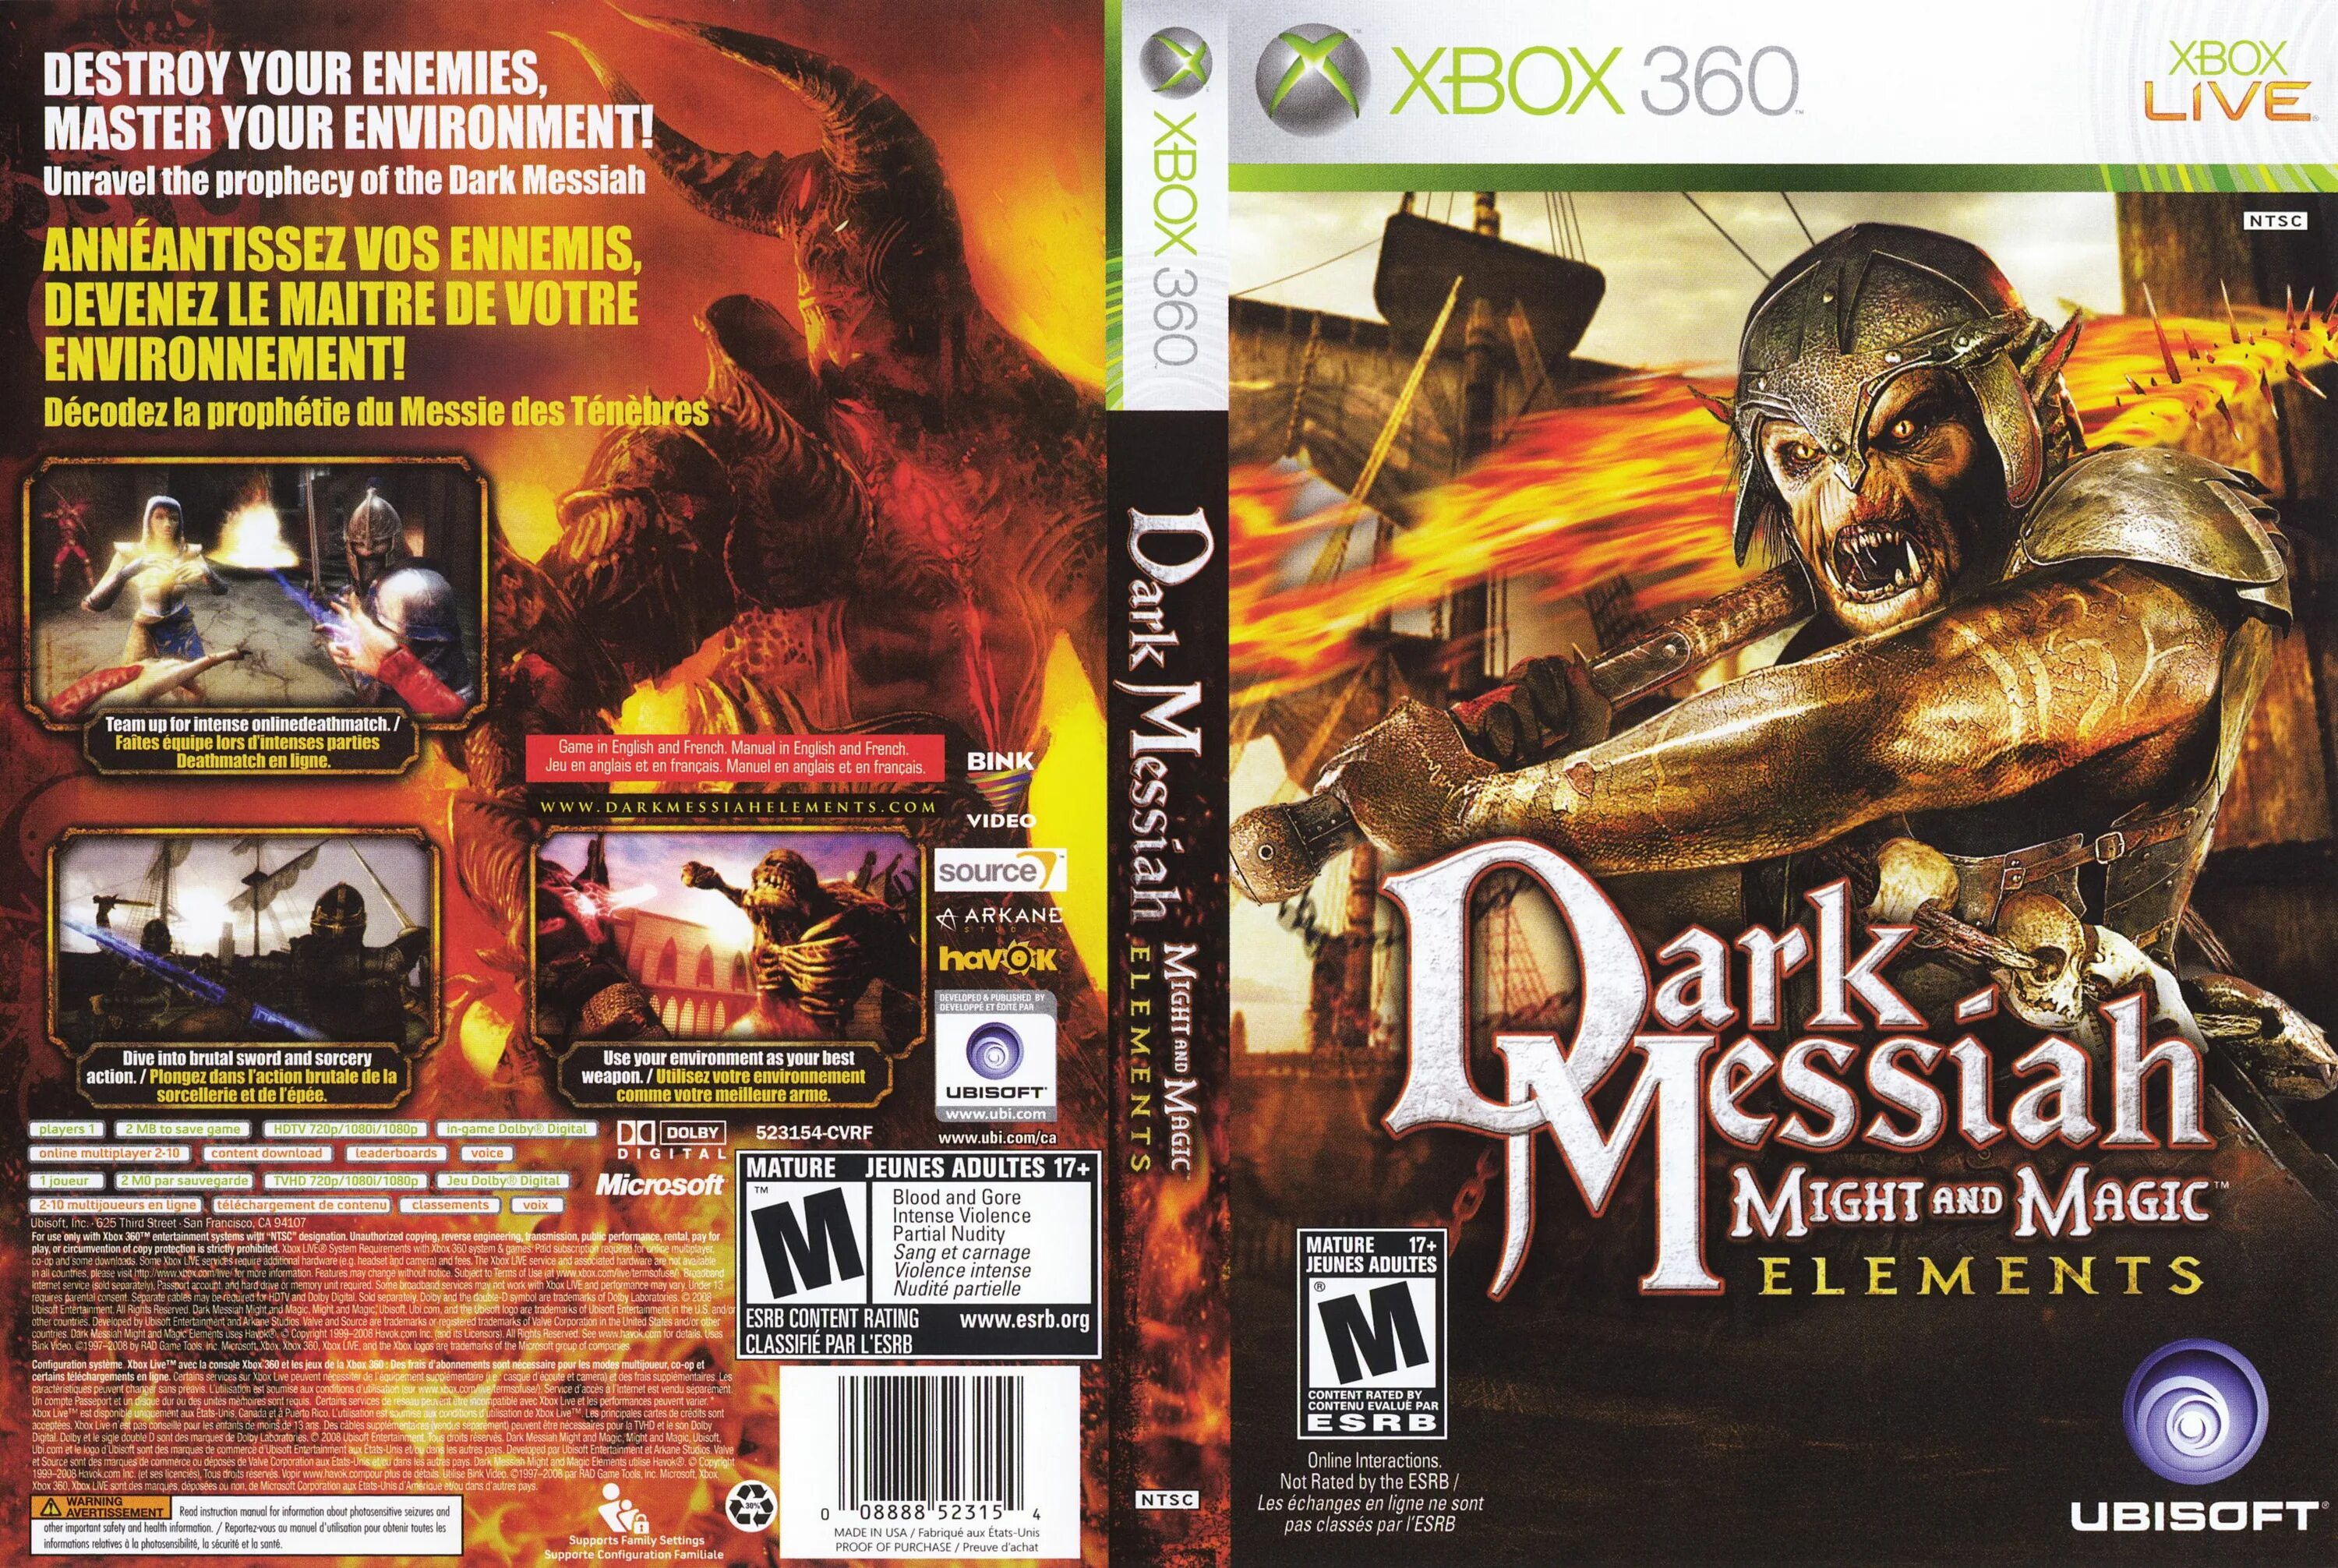 Dark messiah of might игра. Dark Messiah of might and Magic Xbox 360. Dark Messiah of might and Magic: elements xbox360. Dark Messiah of might and Magic Xbox. Dark Messiah of might and Magic обложка.